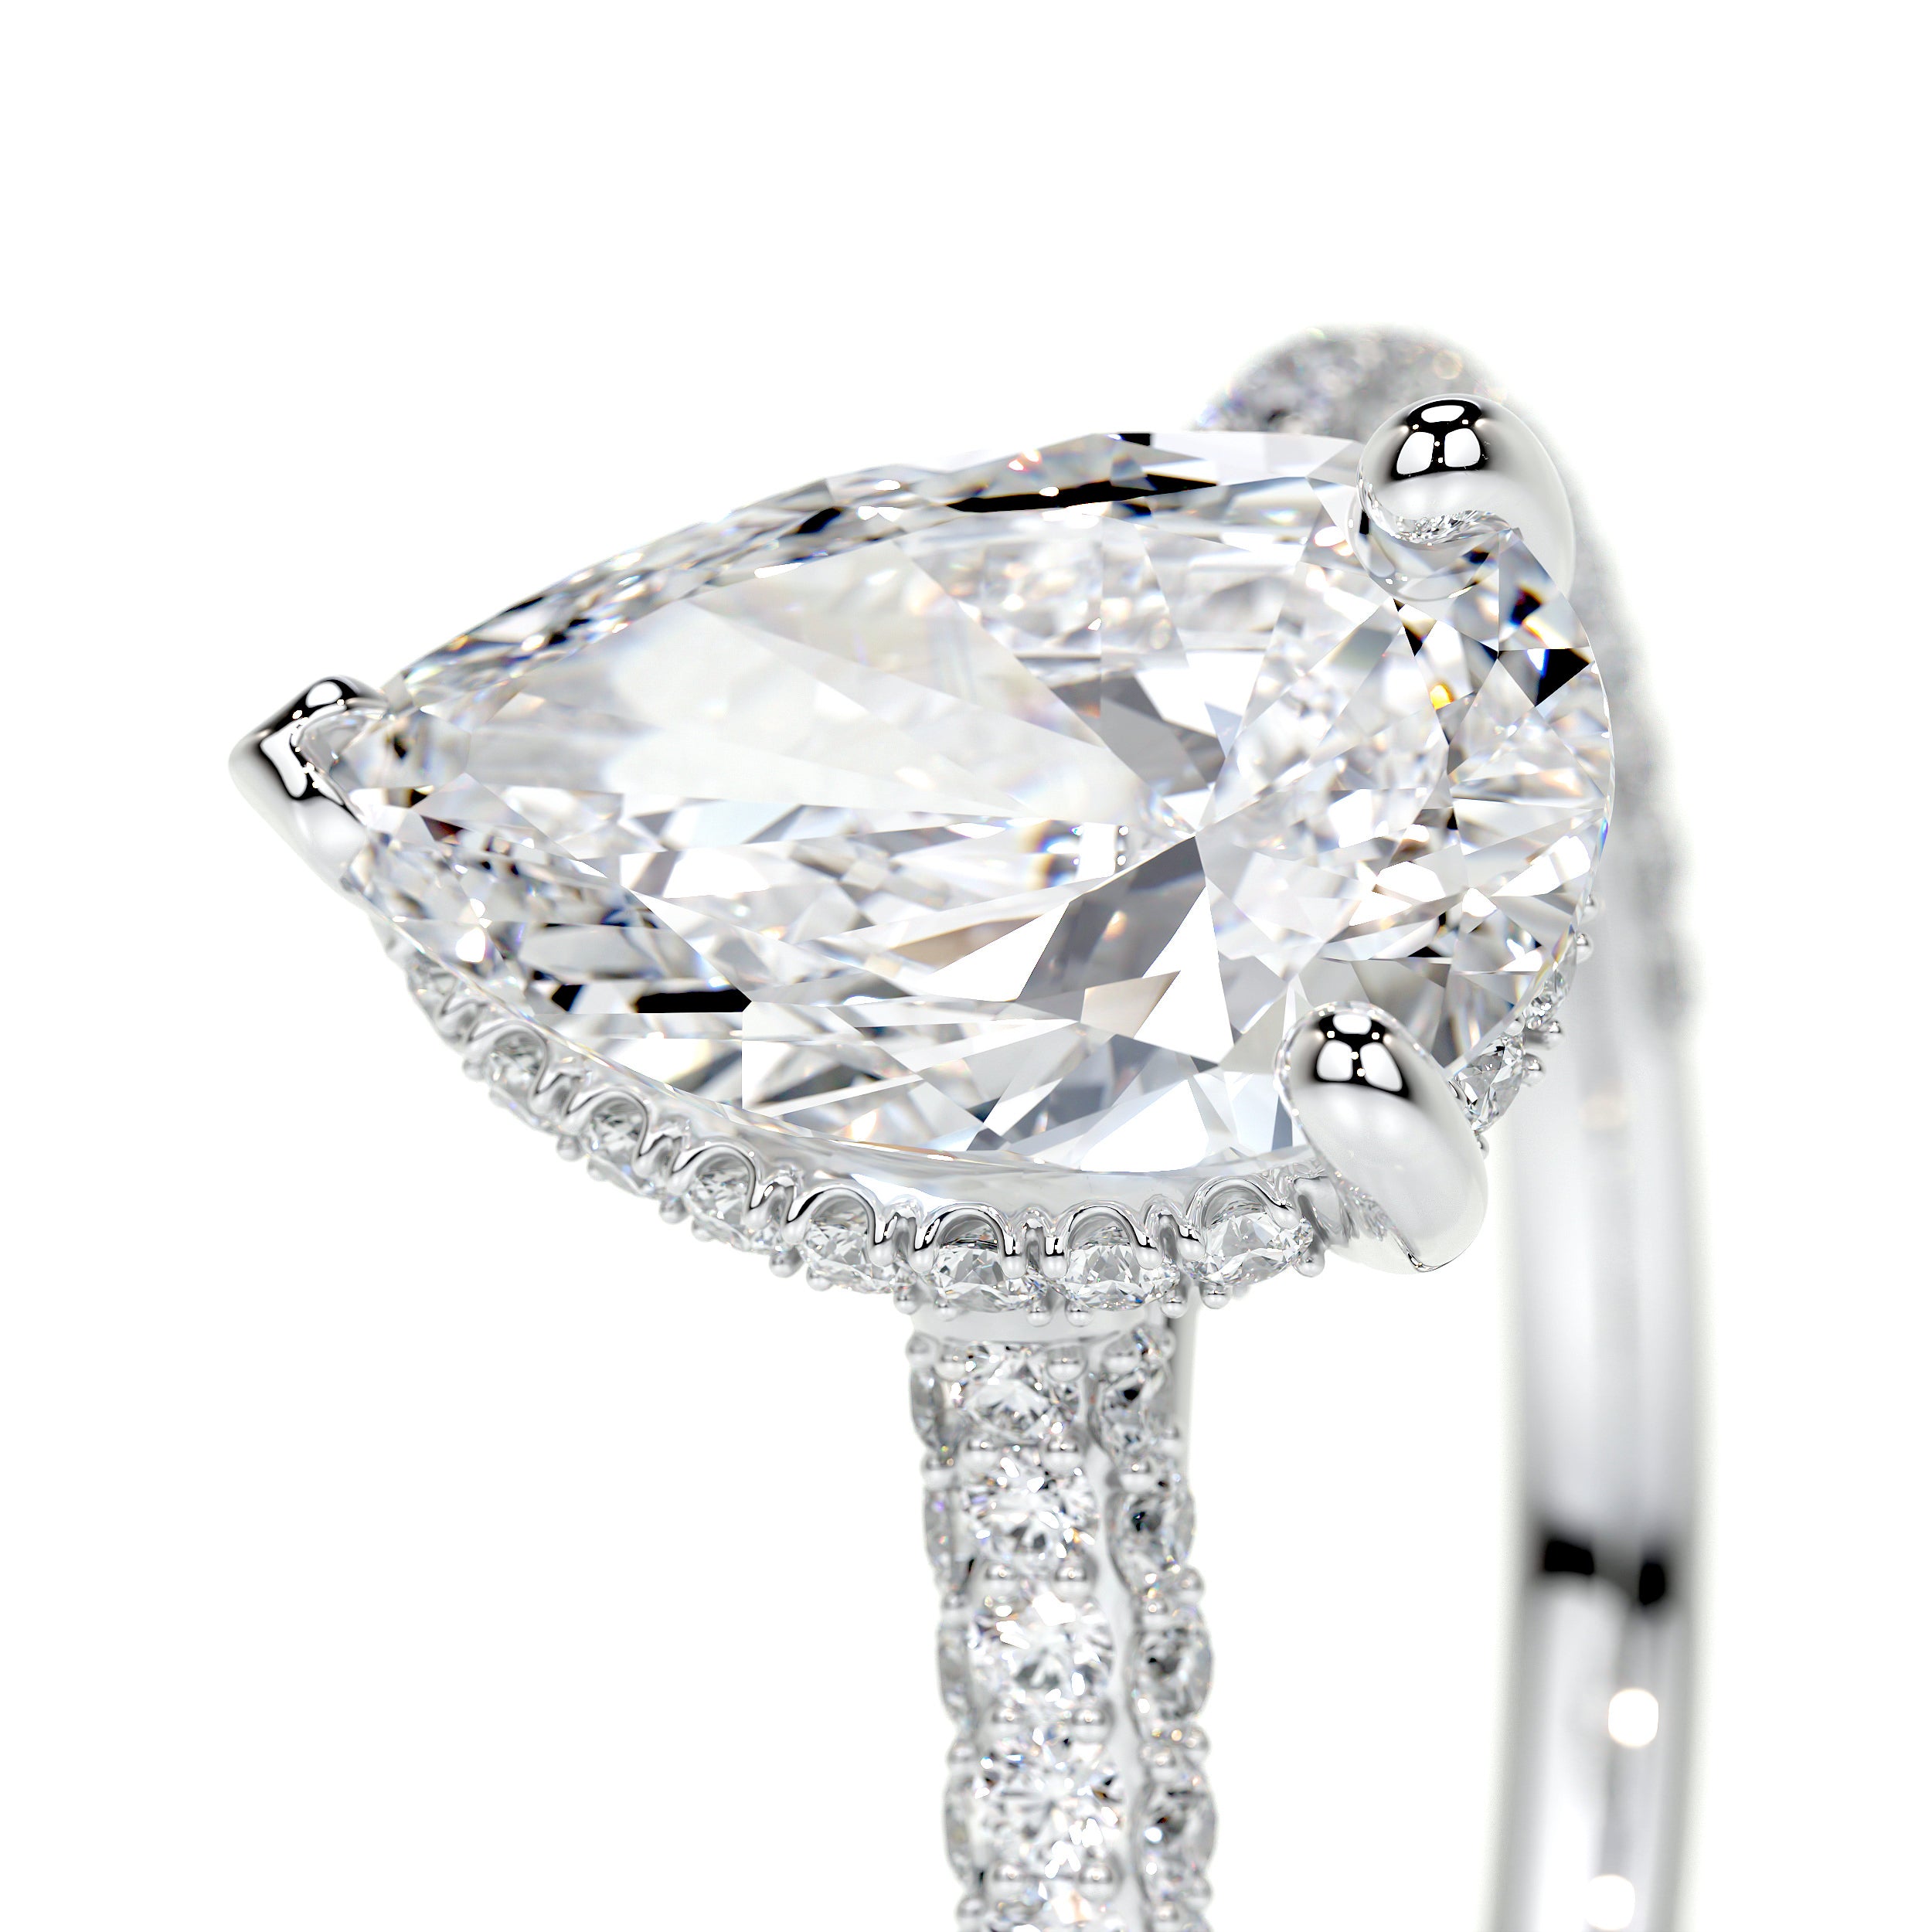 Nakia Lab Grown Diamond Ring   (2.00 Carat) -14K White Gold